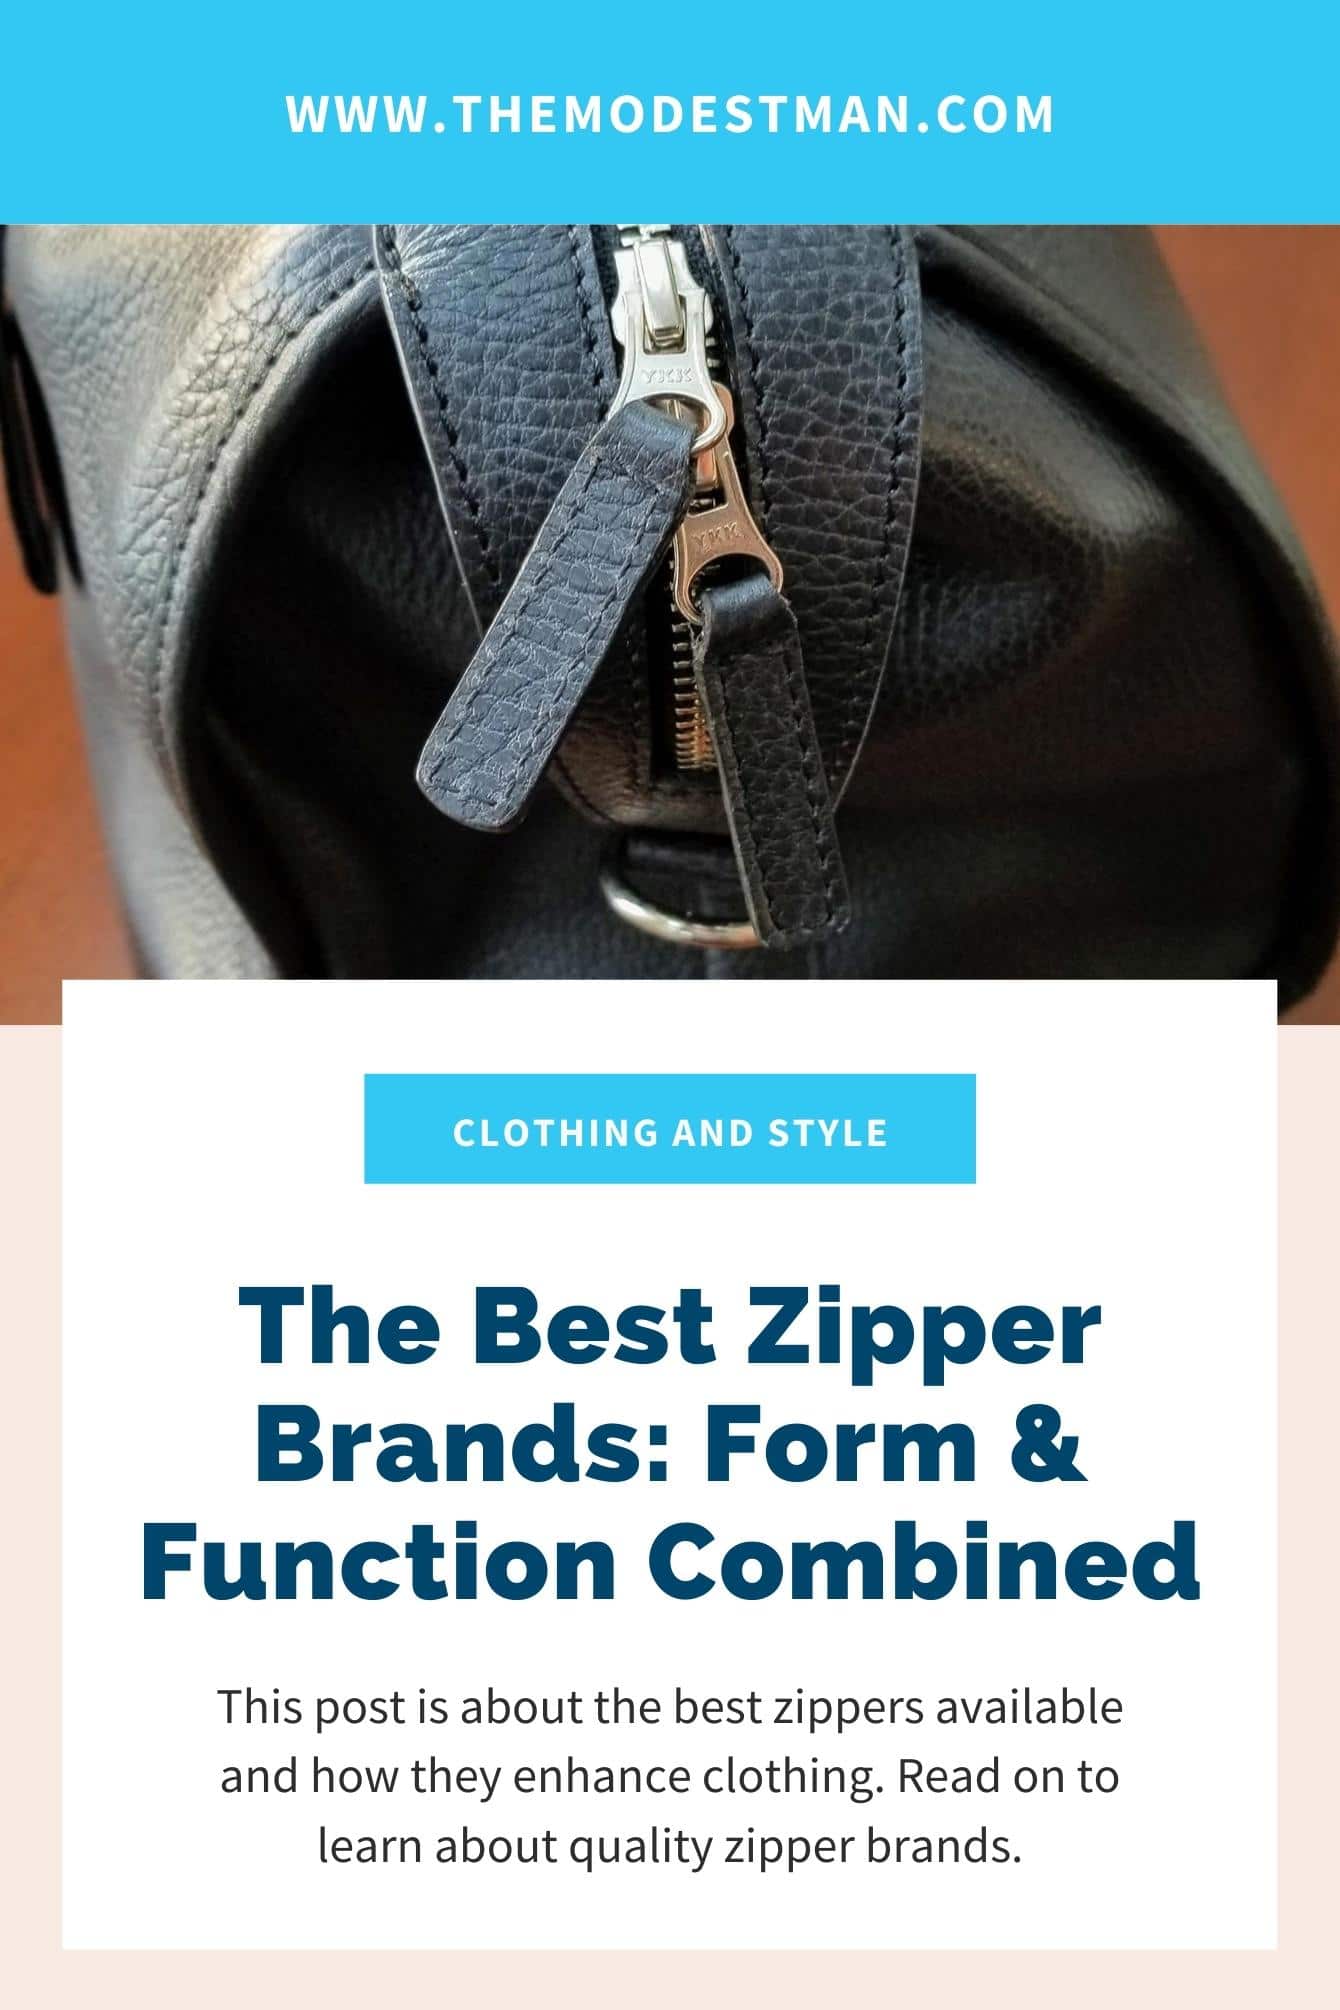 The Best Zipper Brands: Form & Function Combined